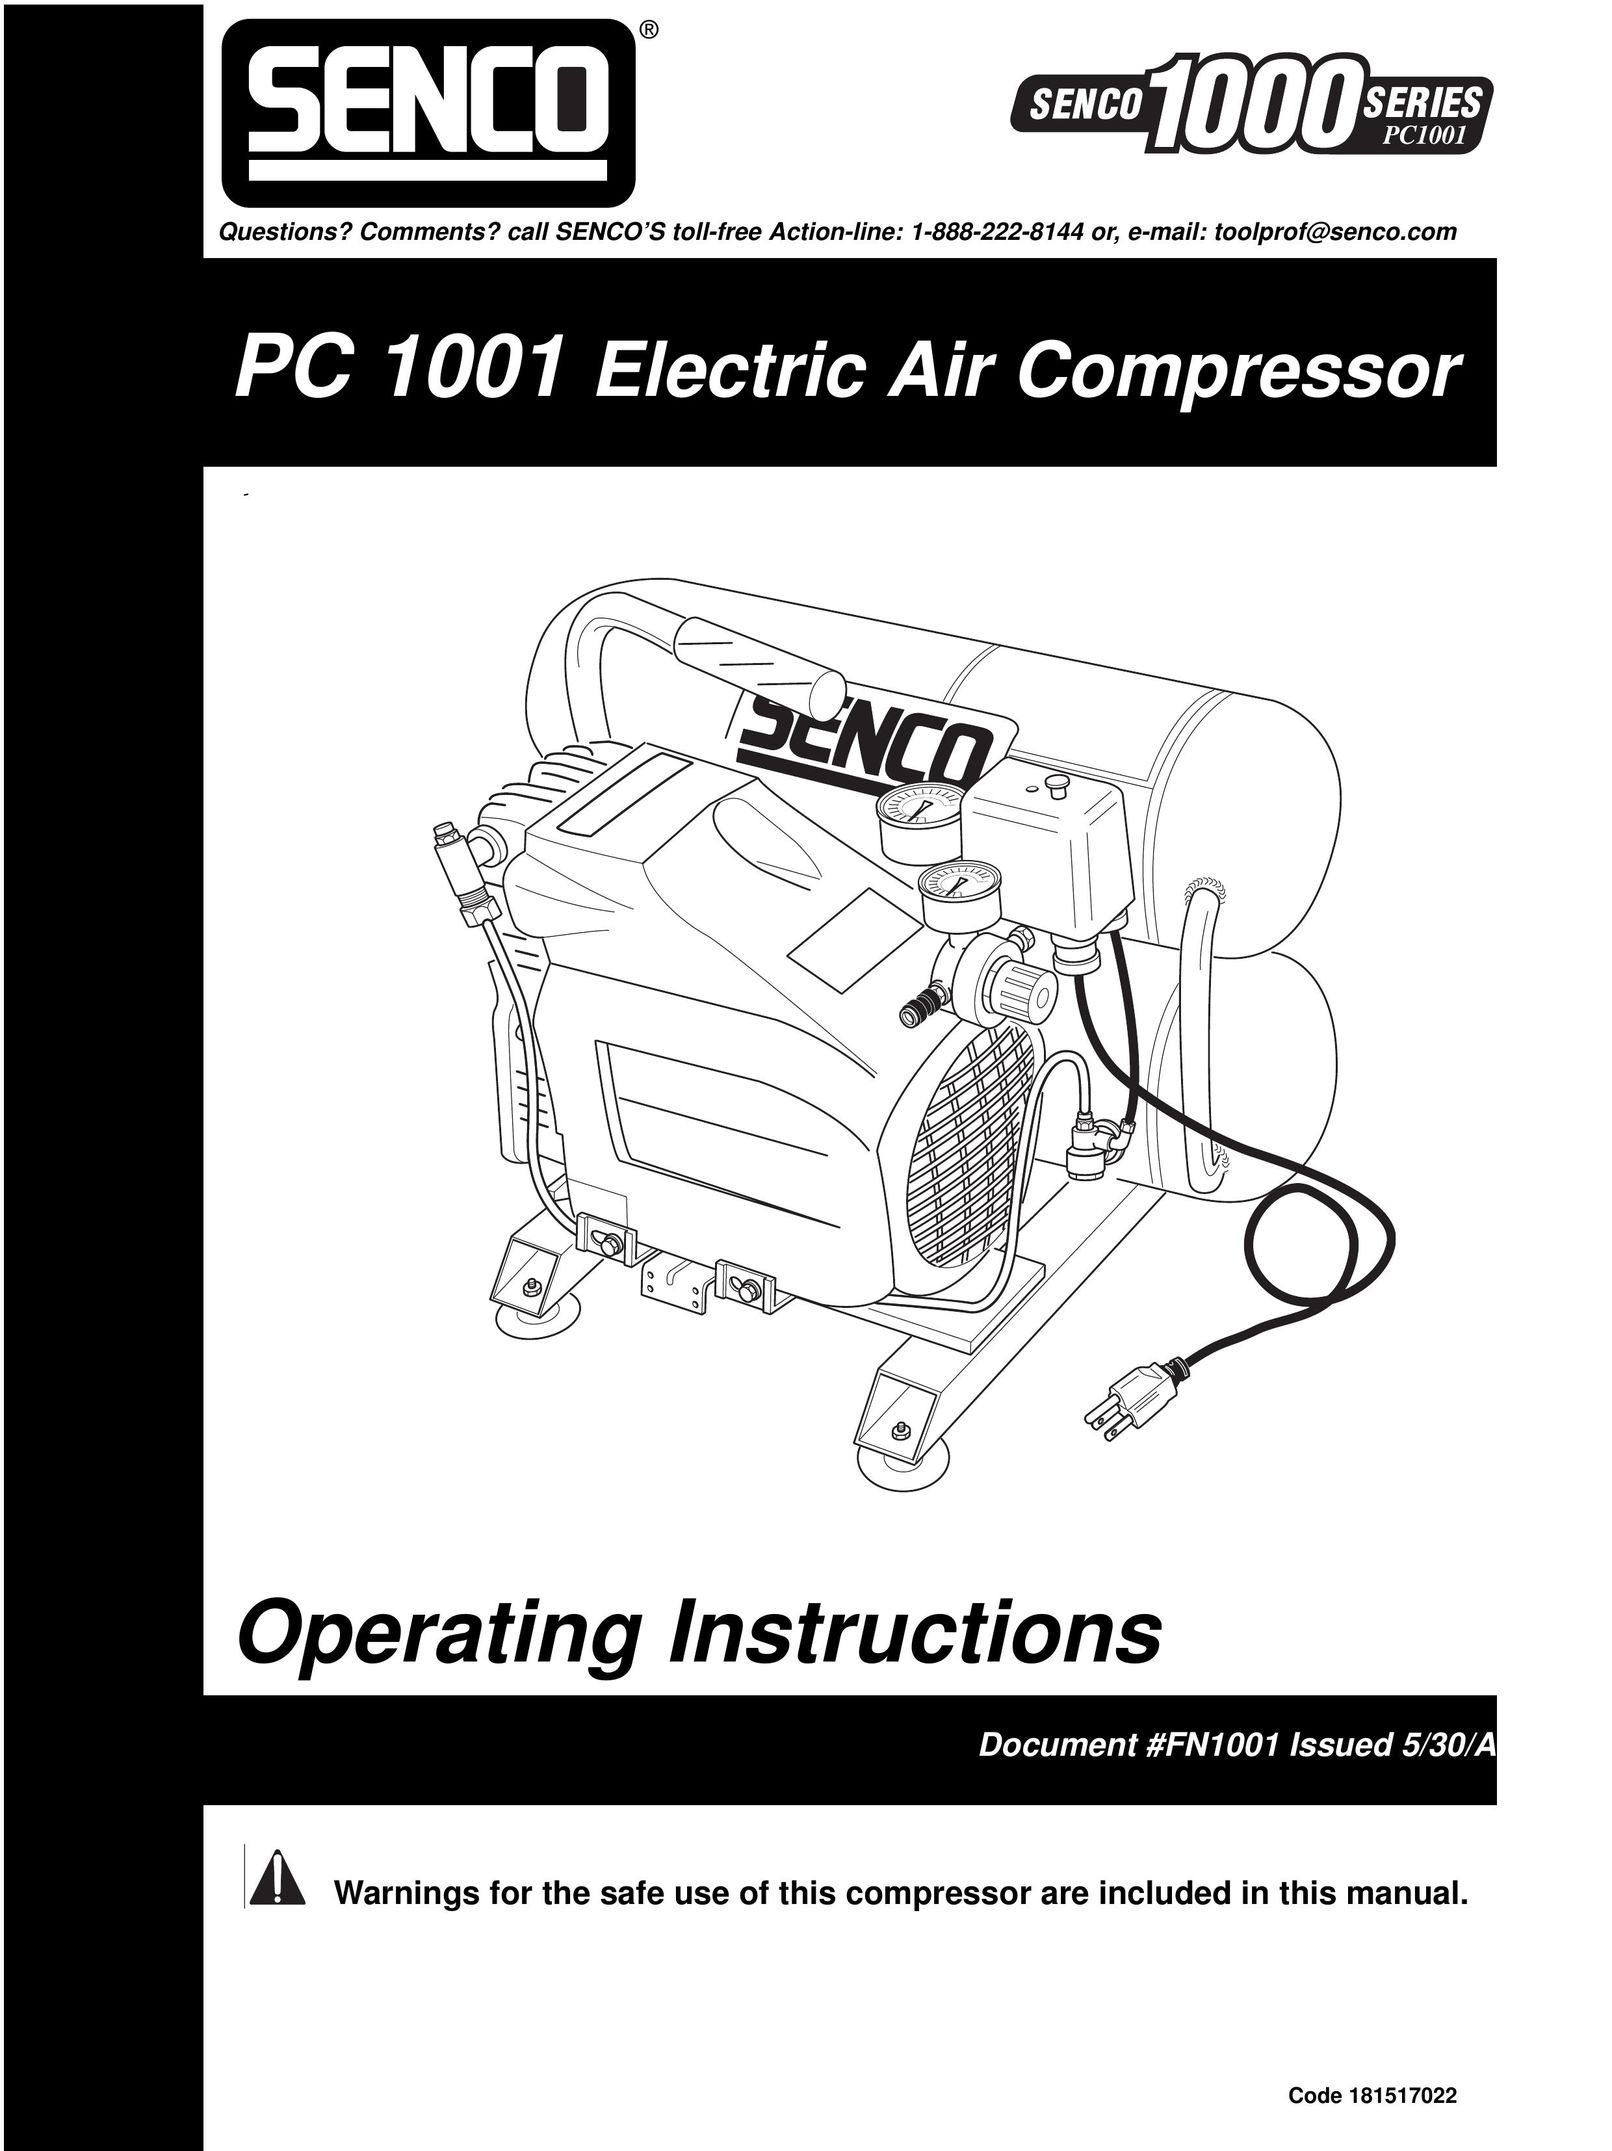 Senco PC1001 Air Compressor User Manual